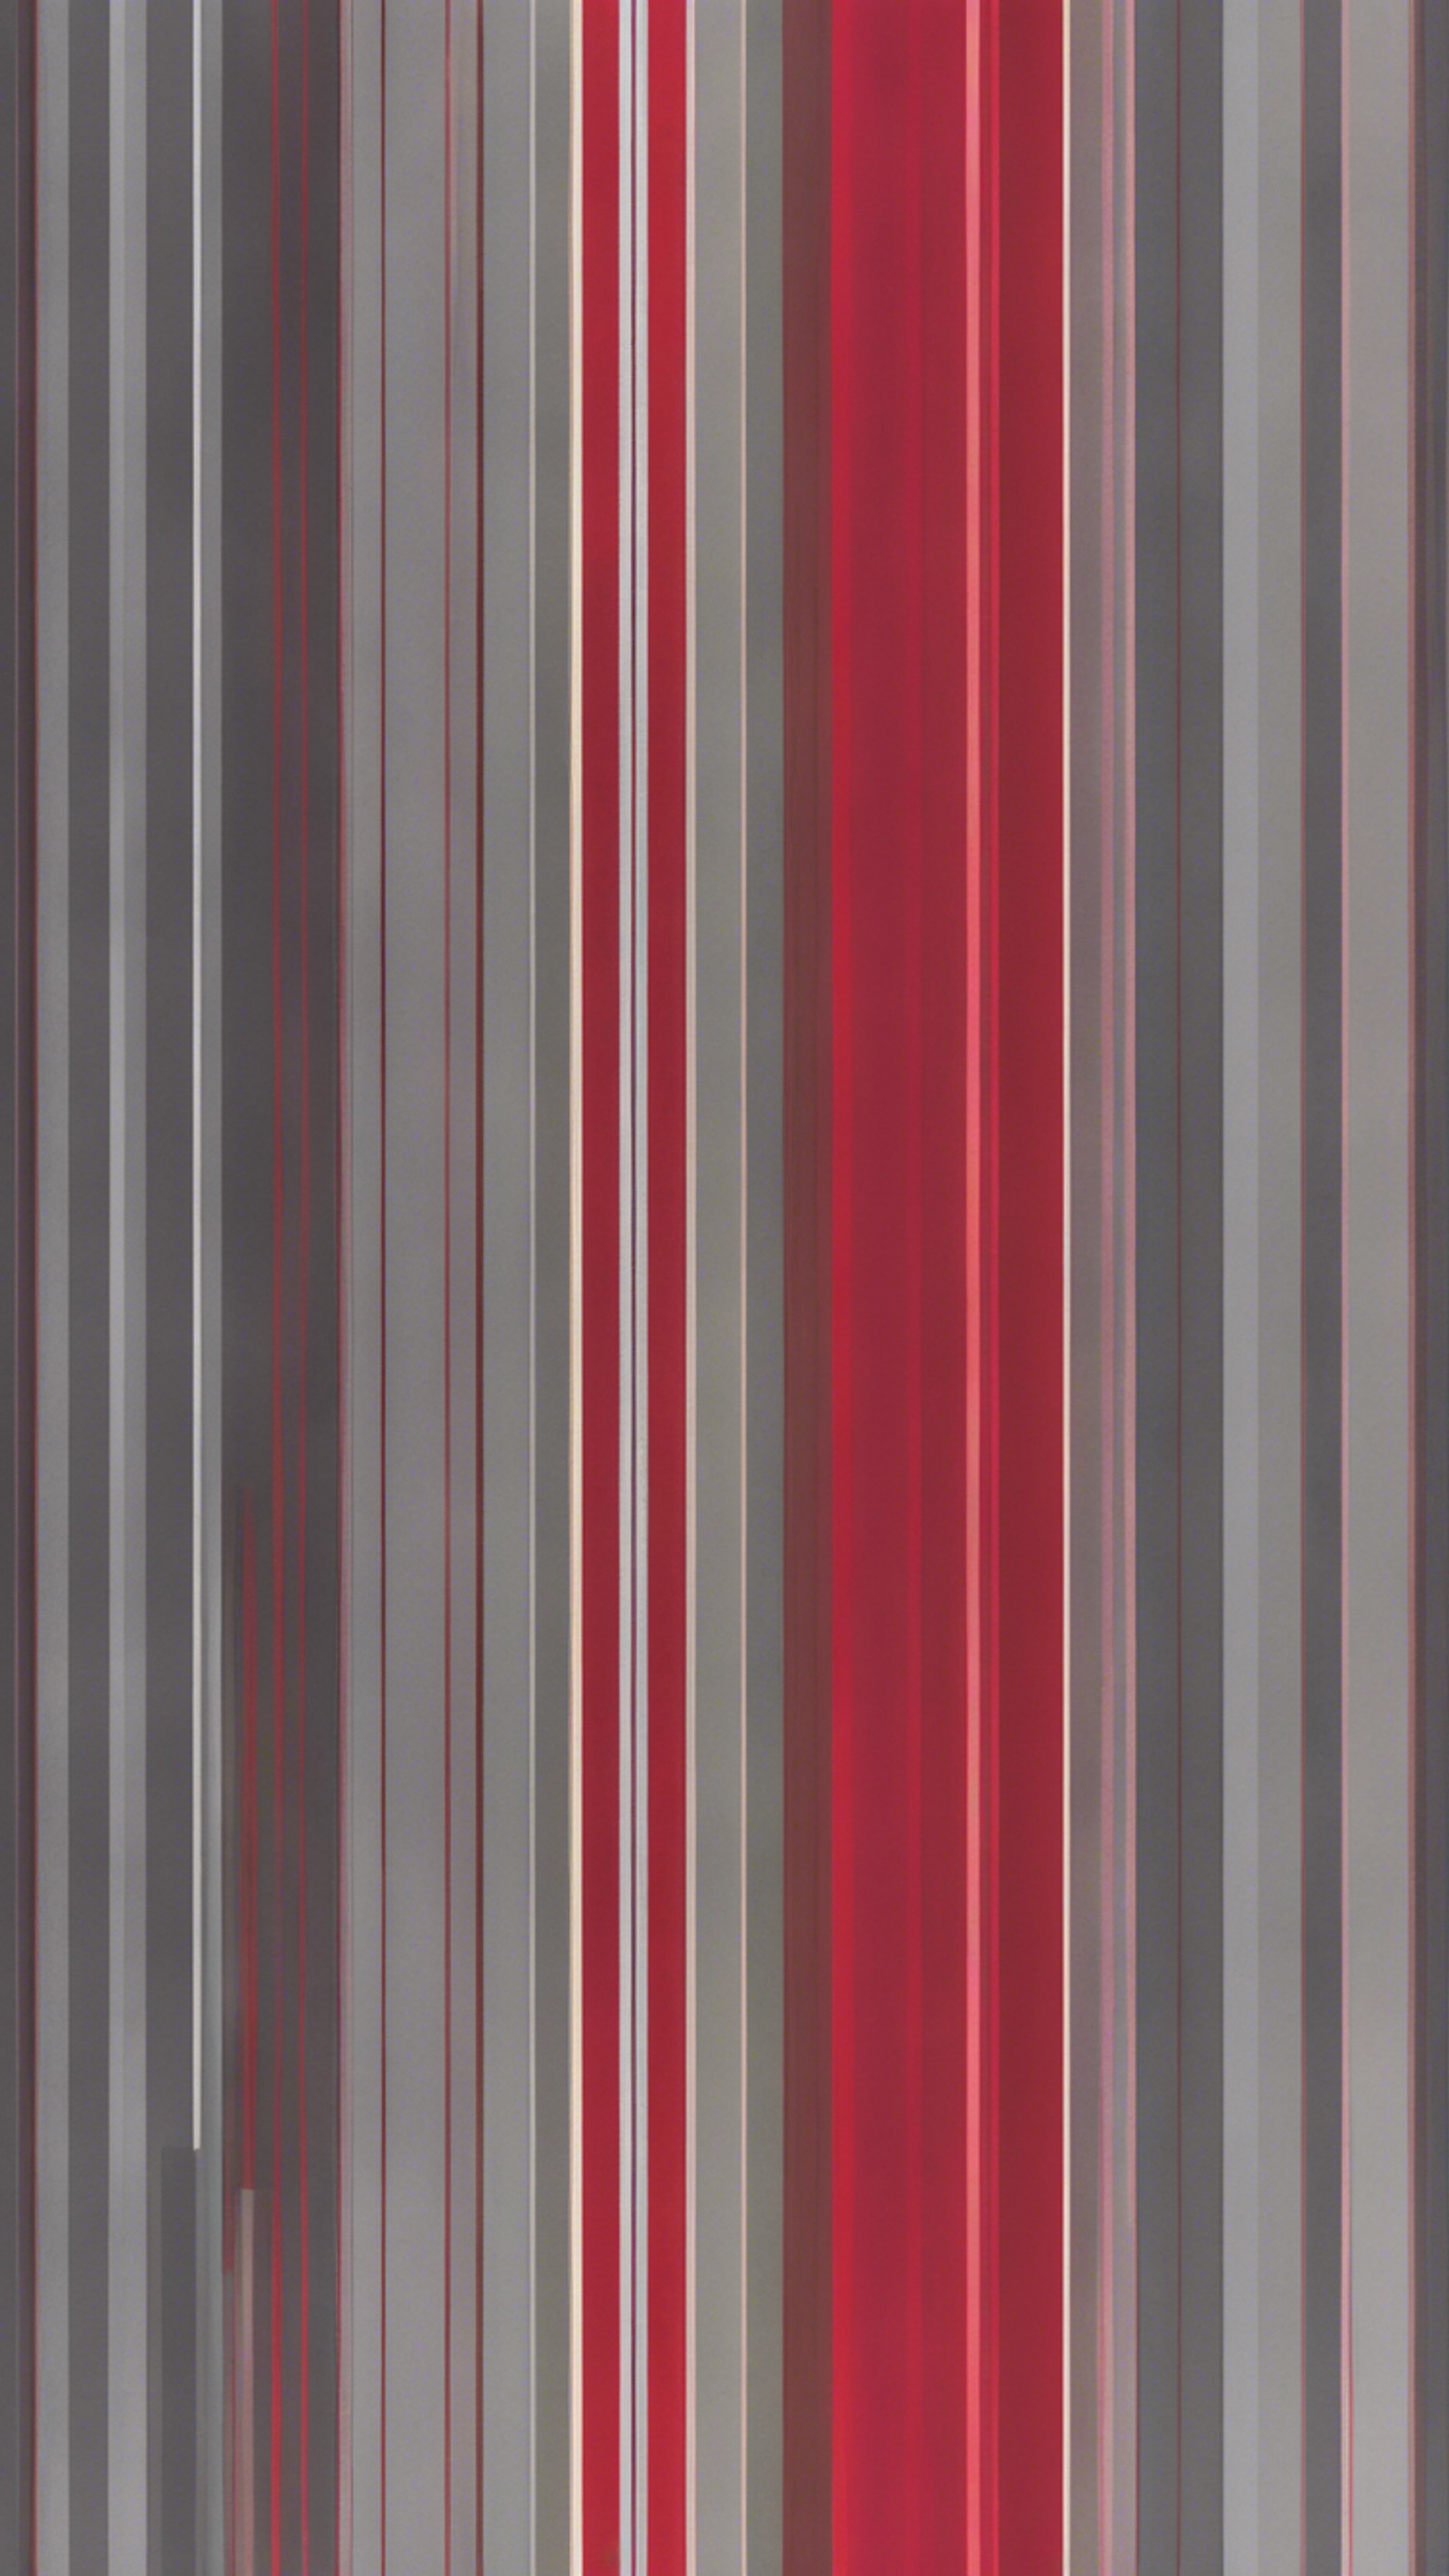 Pattern inspired by modern art, showcasing alternating bands of red and grey in a gradient arrangement. Дэлгэцийн зураг[fecd92d91f0c4817b510]